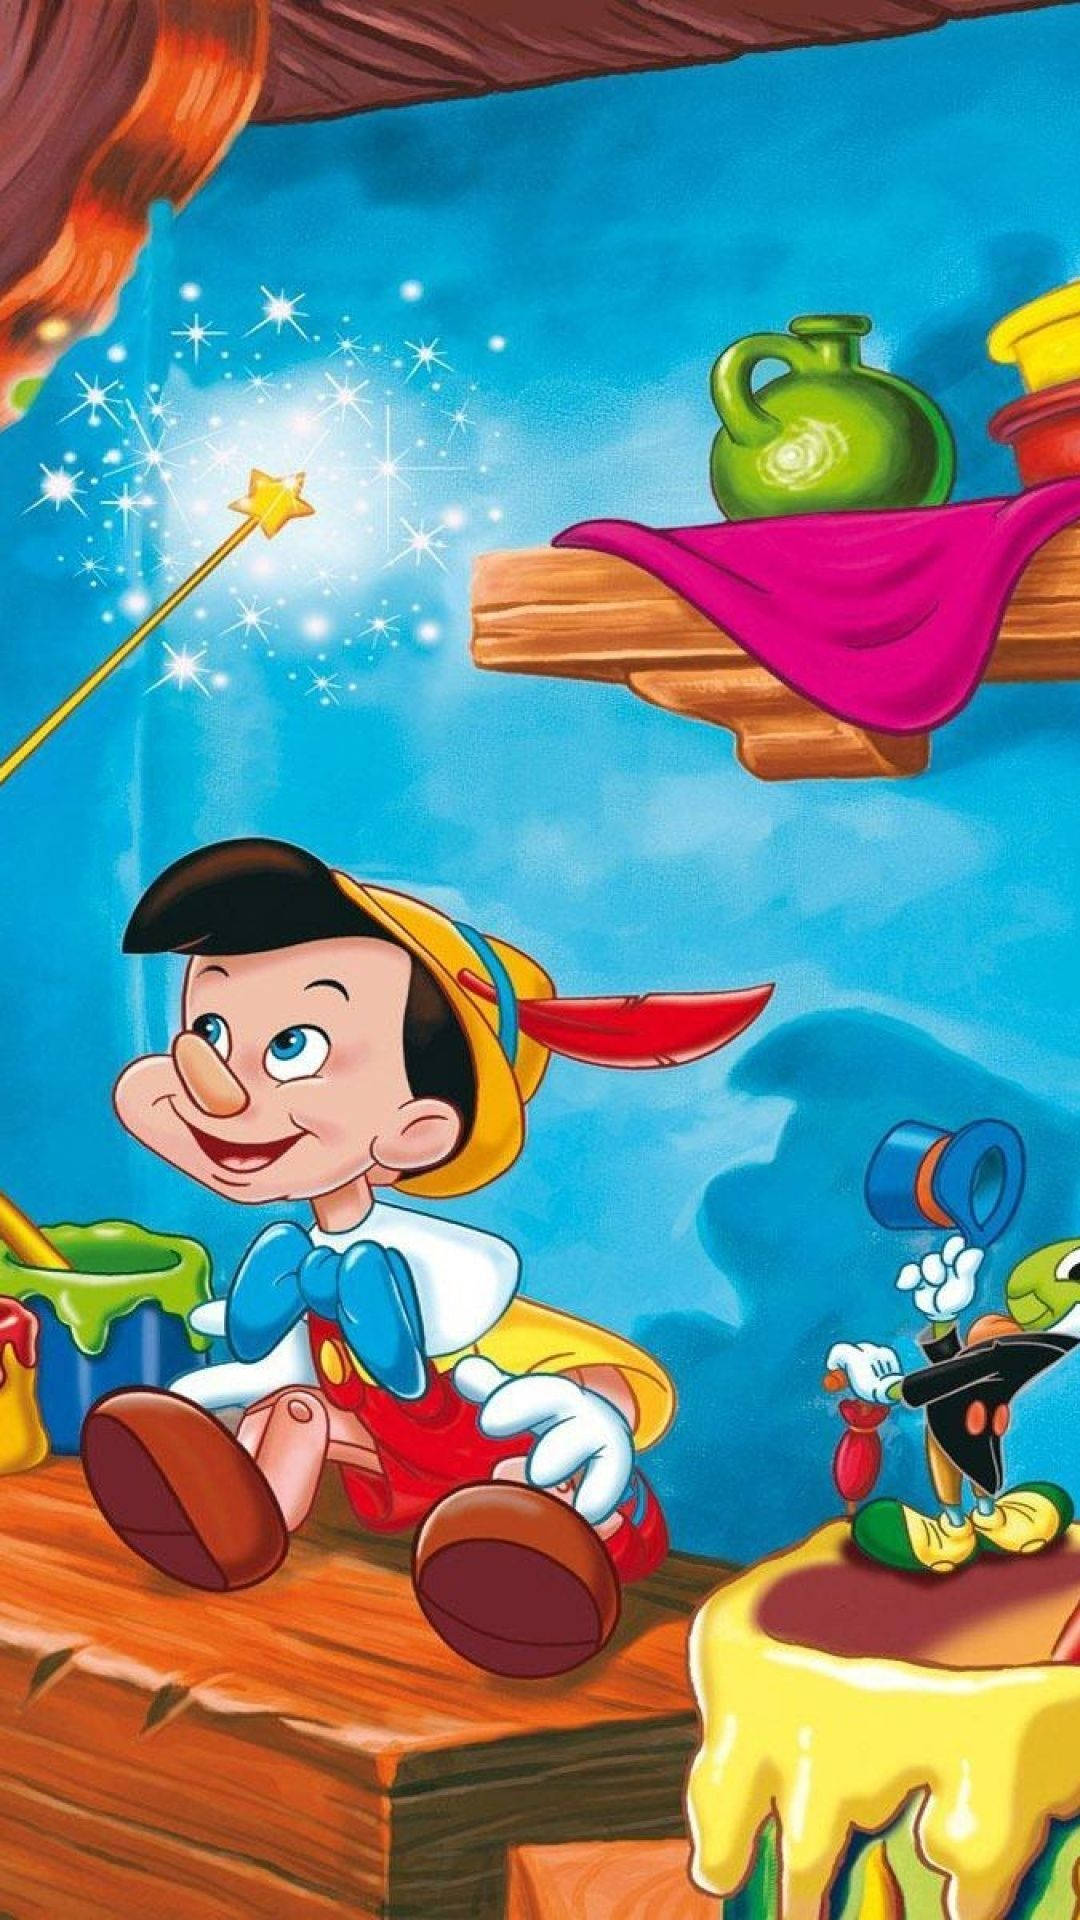 Pinocchio Sparkling Wanderer Tapet: Udforsk en magisk eventyrverden med Pinocchio følges af hans gyldne tryllestav. Wallpaper